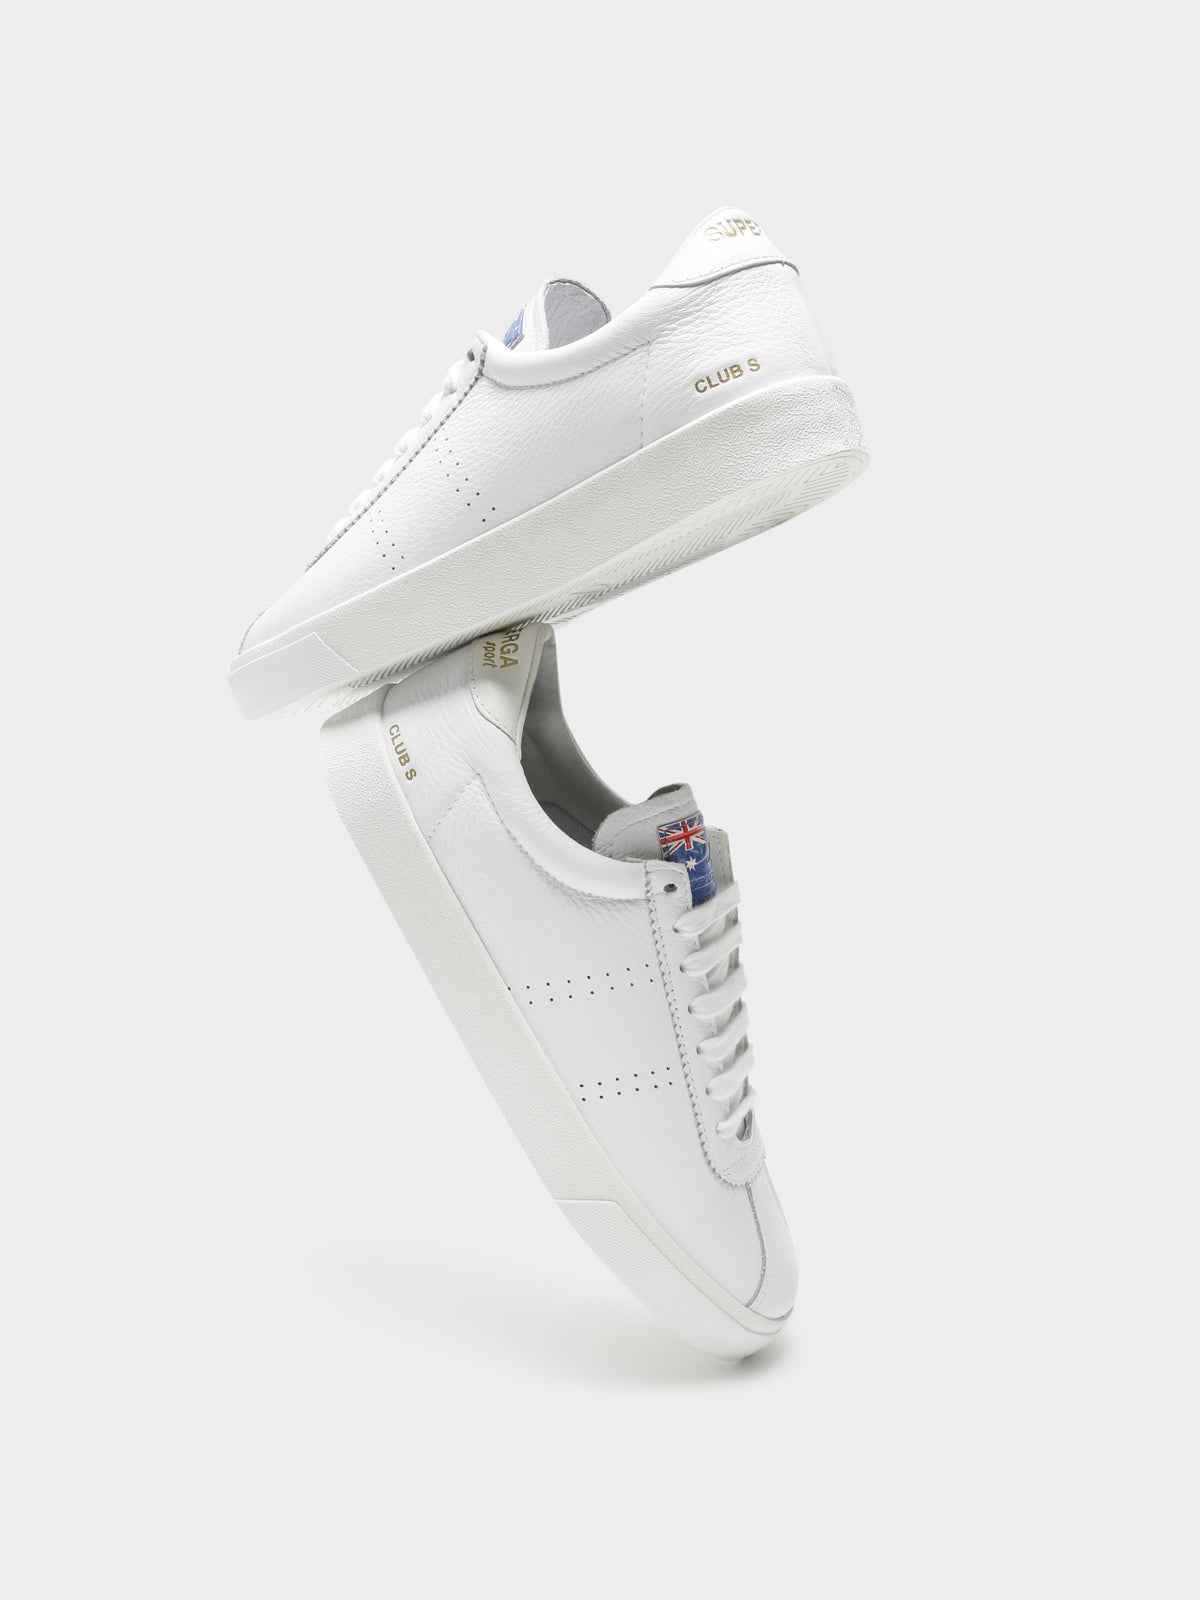 Unisex 2869 Club Comfleau Australia Sneaker in White